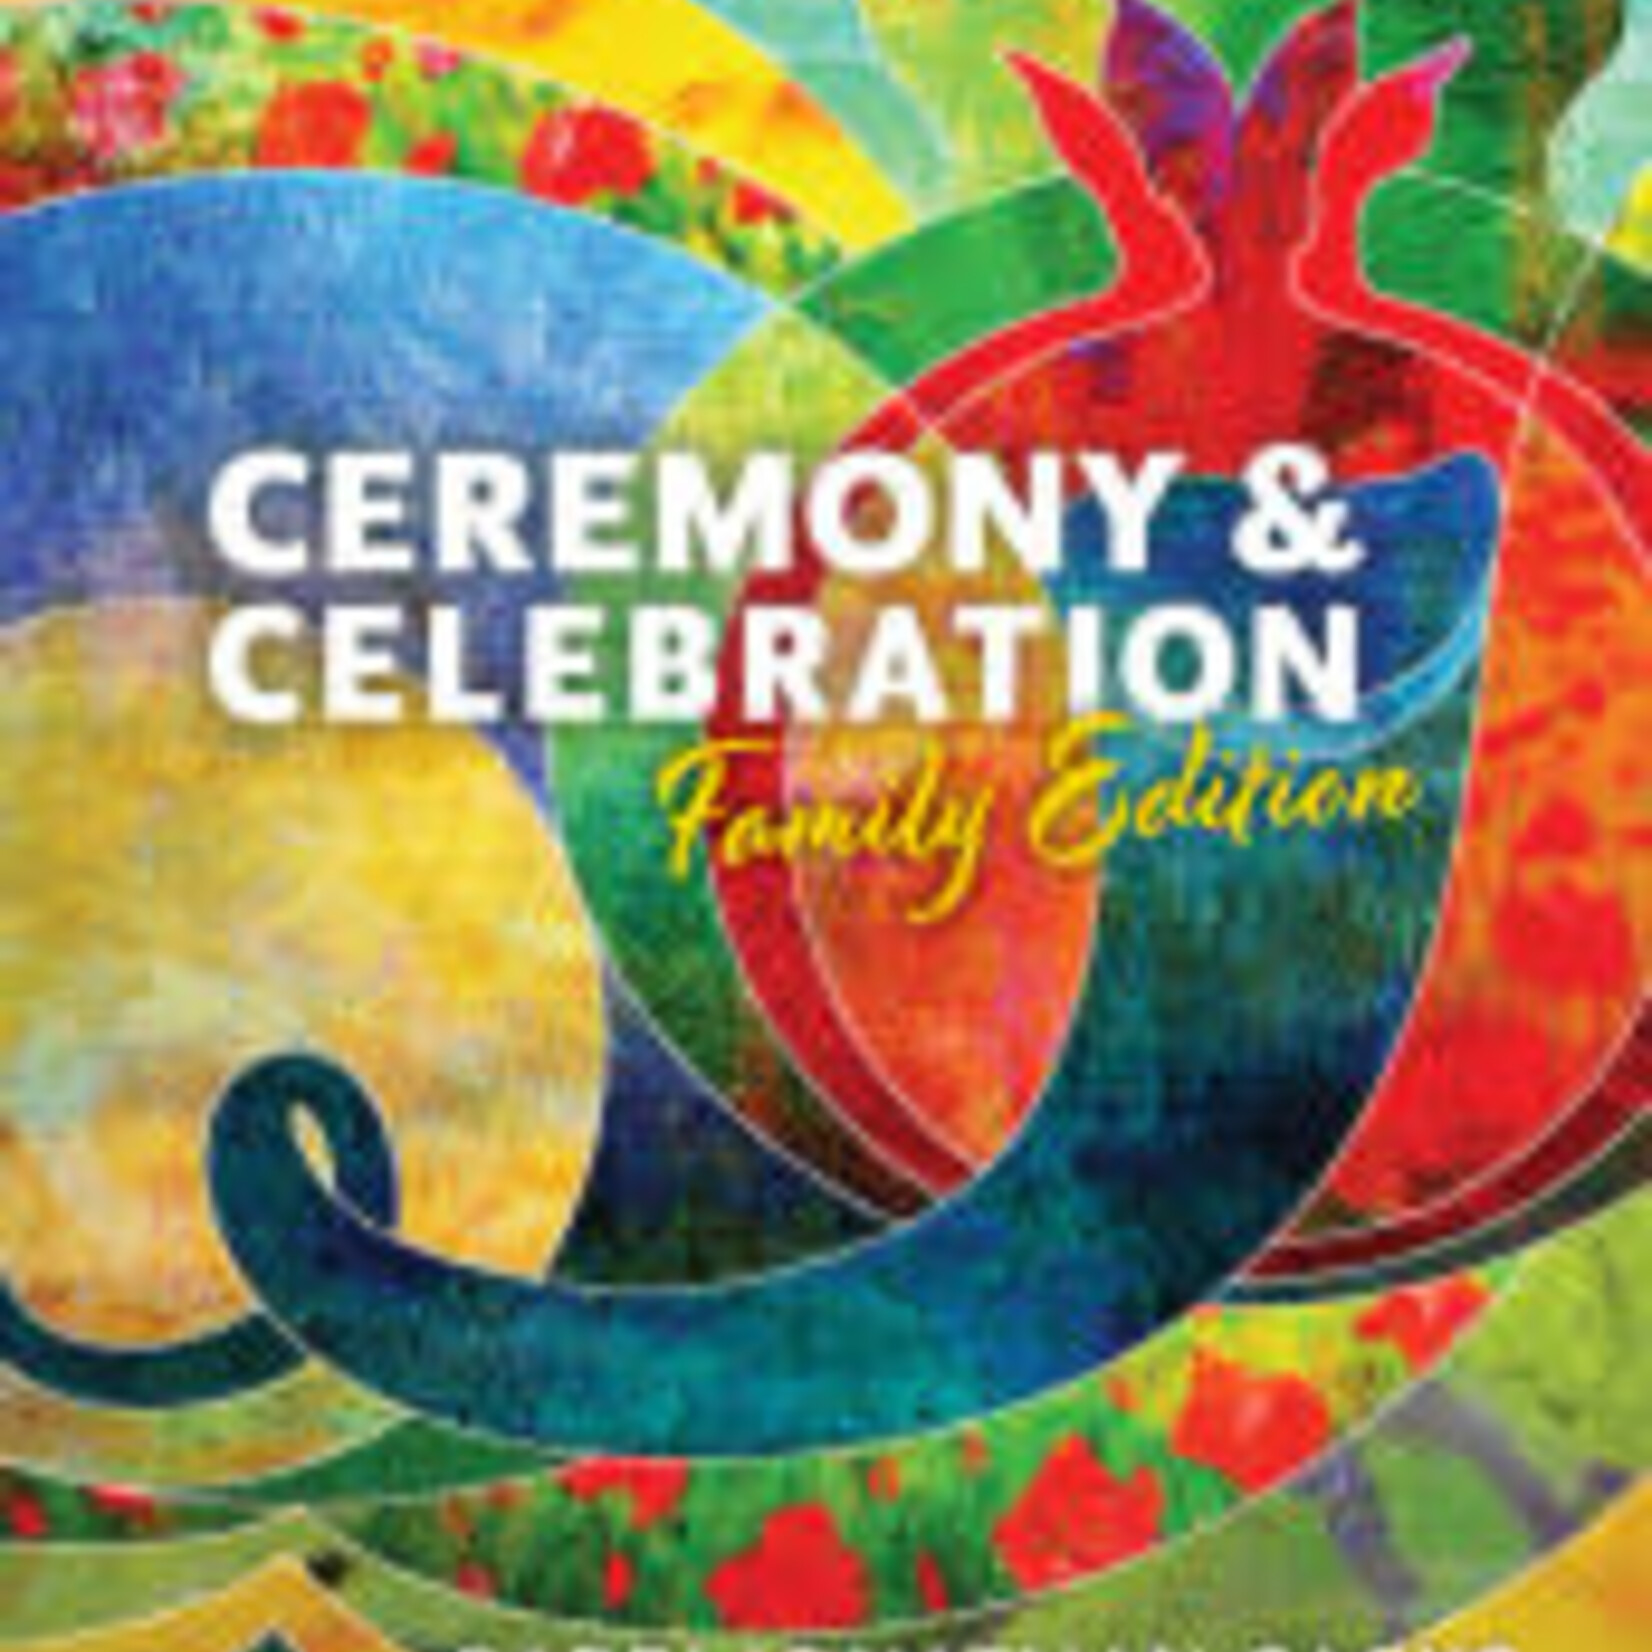 Ceremony & Celebration Family Edition by Jonathan Sacks